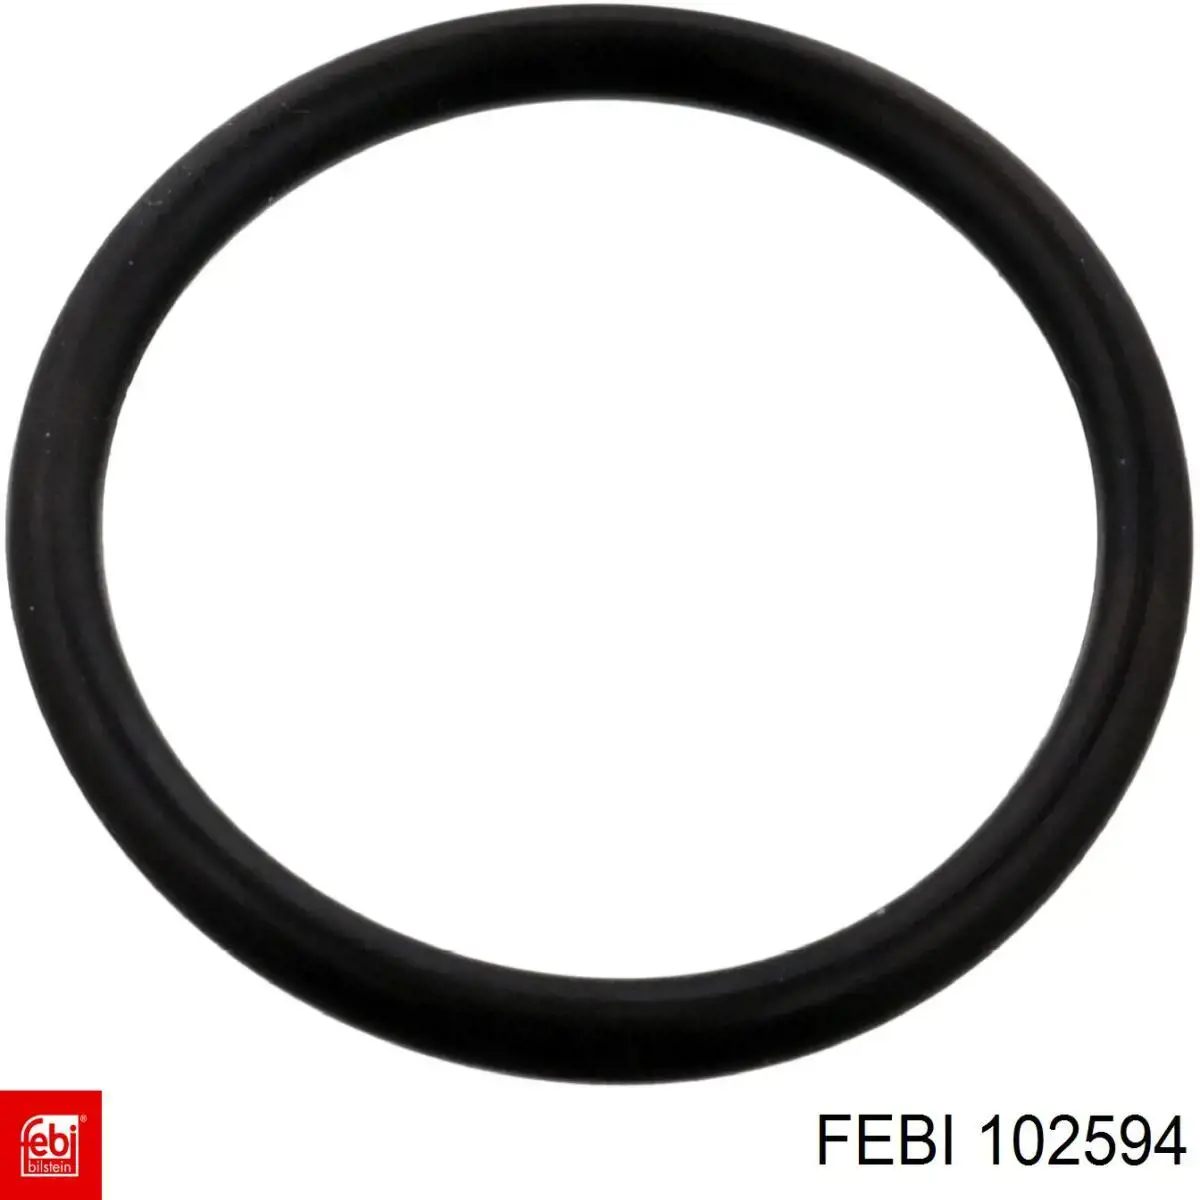 102594 Febi anillo de estanqueidad de un tubo de derivación de un radiador